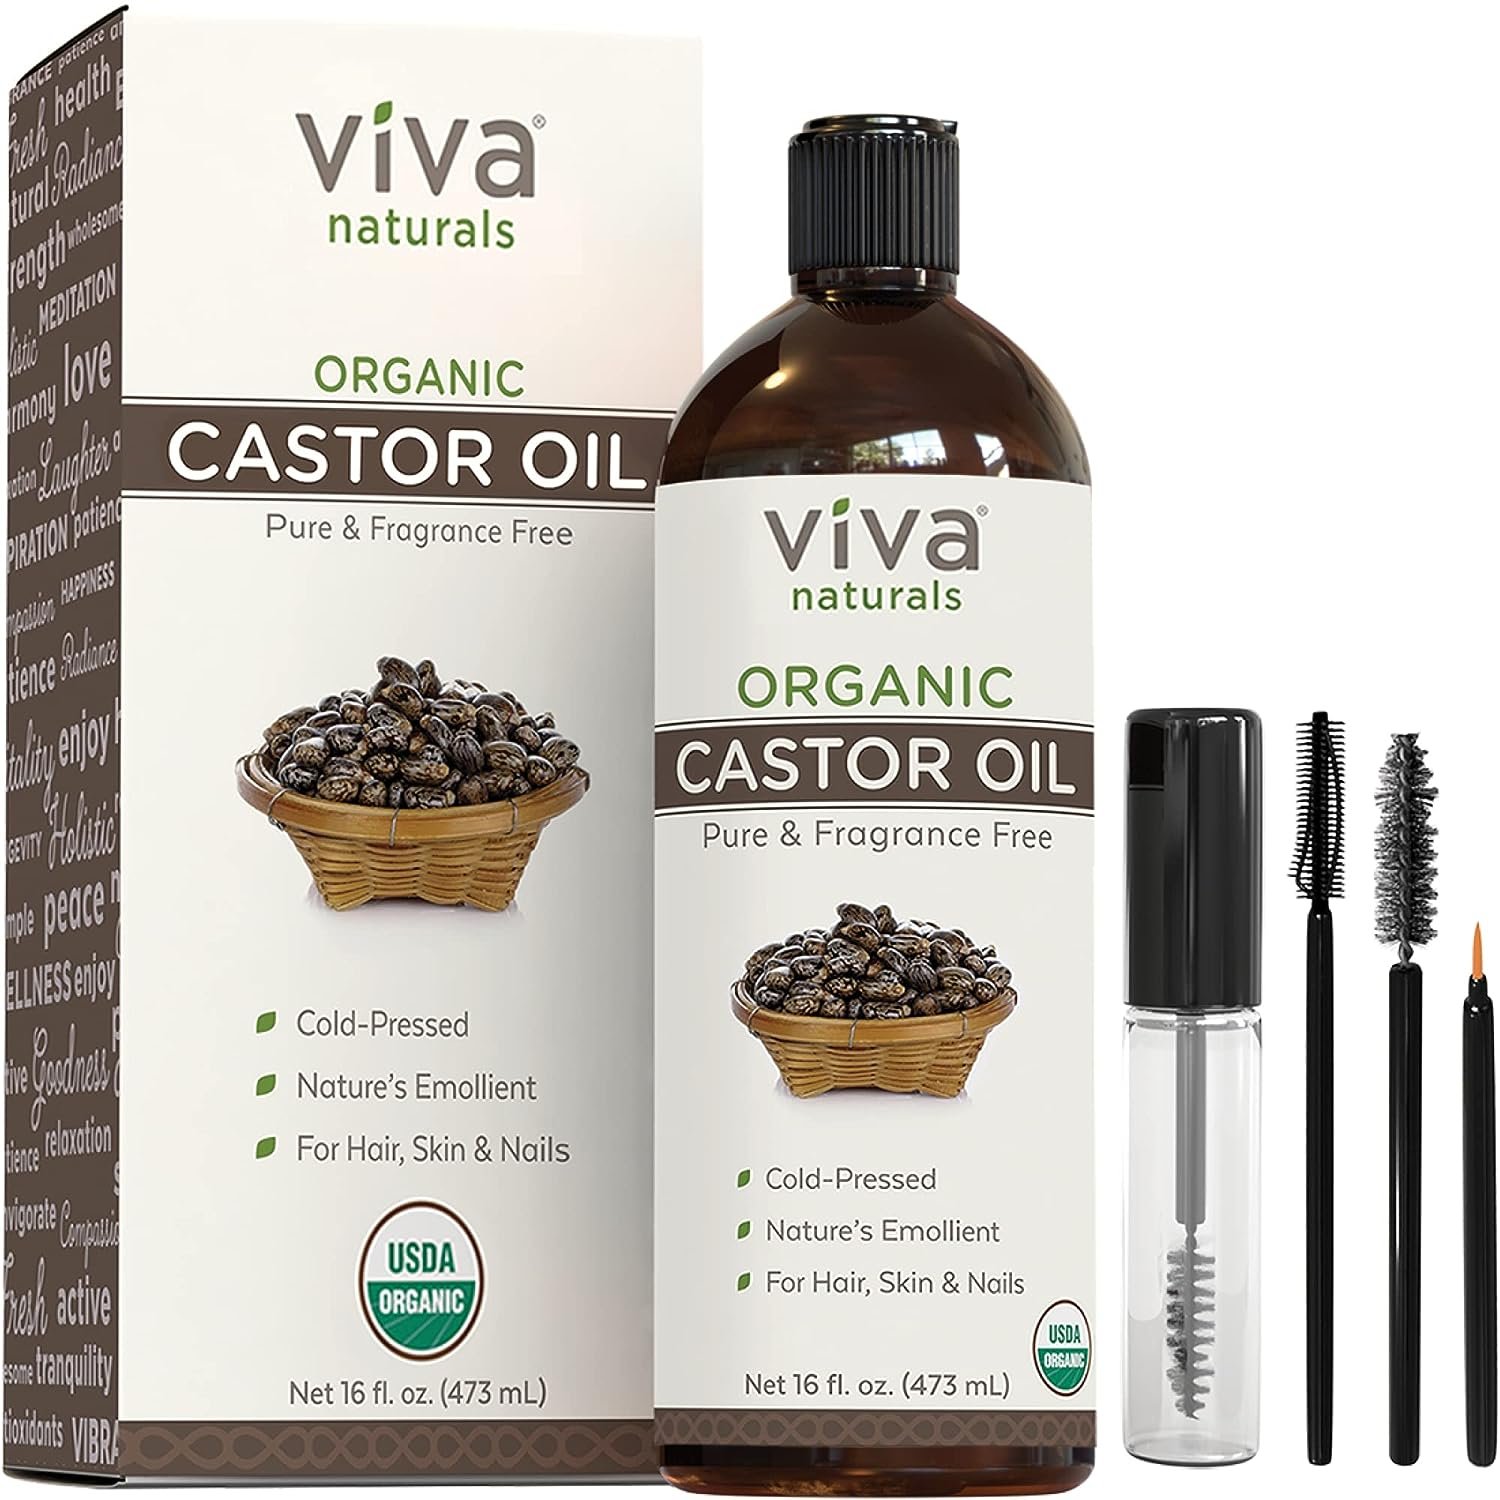 Organic Castor Oil for Eyelashes and Eyebrows - 16 fl oz, USDA Organic, Pure Hexane-Free Moisturizer